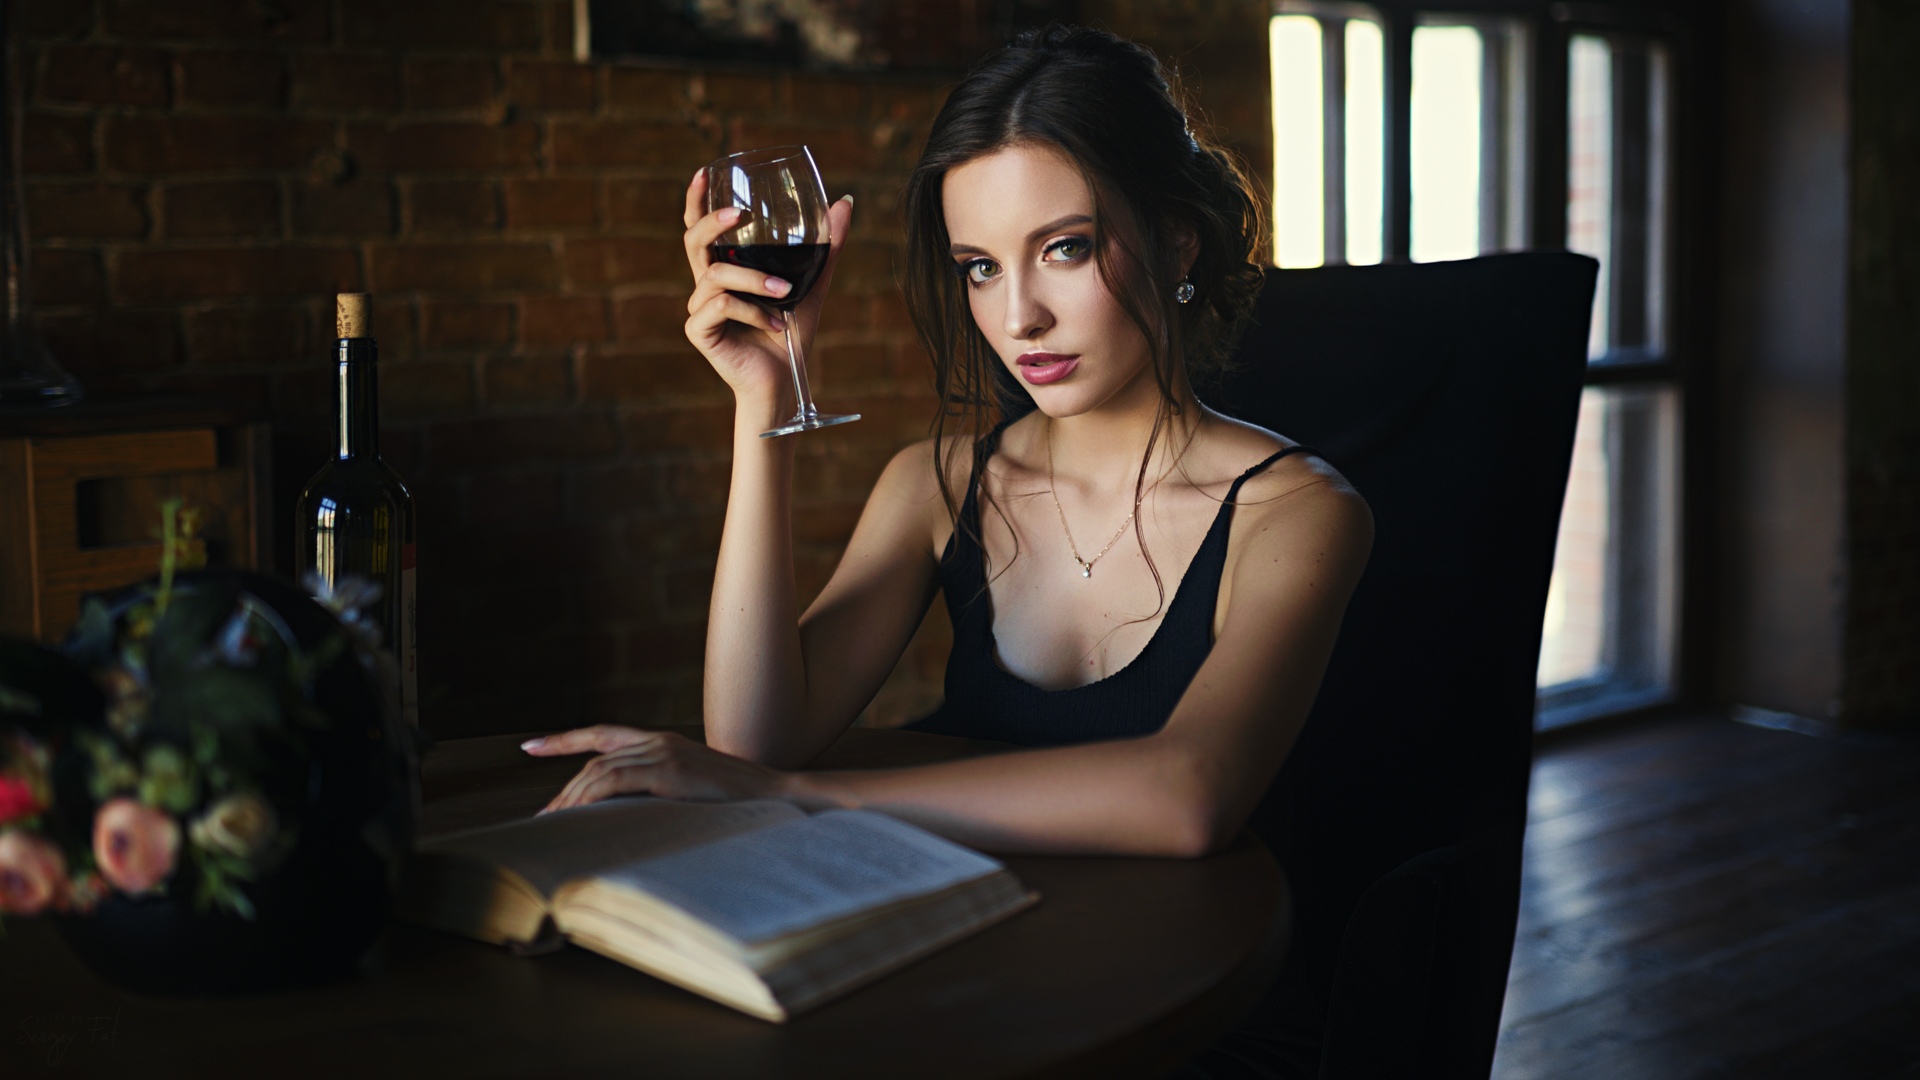 Sergey Fat Sergey Zhirnov Women Model Portrait Looking At Viewer Tank Top Necklace Wine Books Sittin 1920x1080